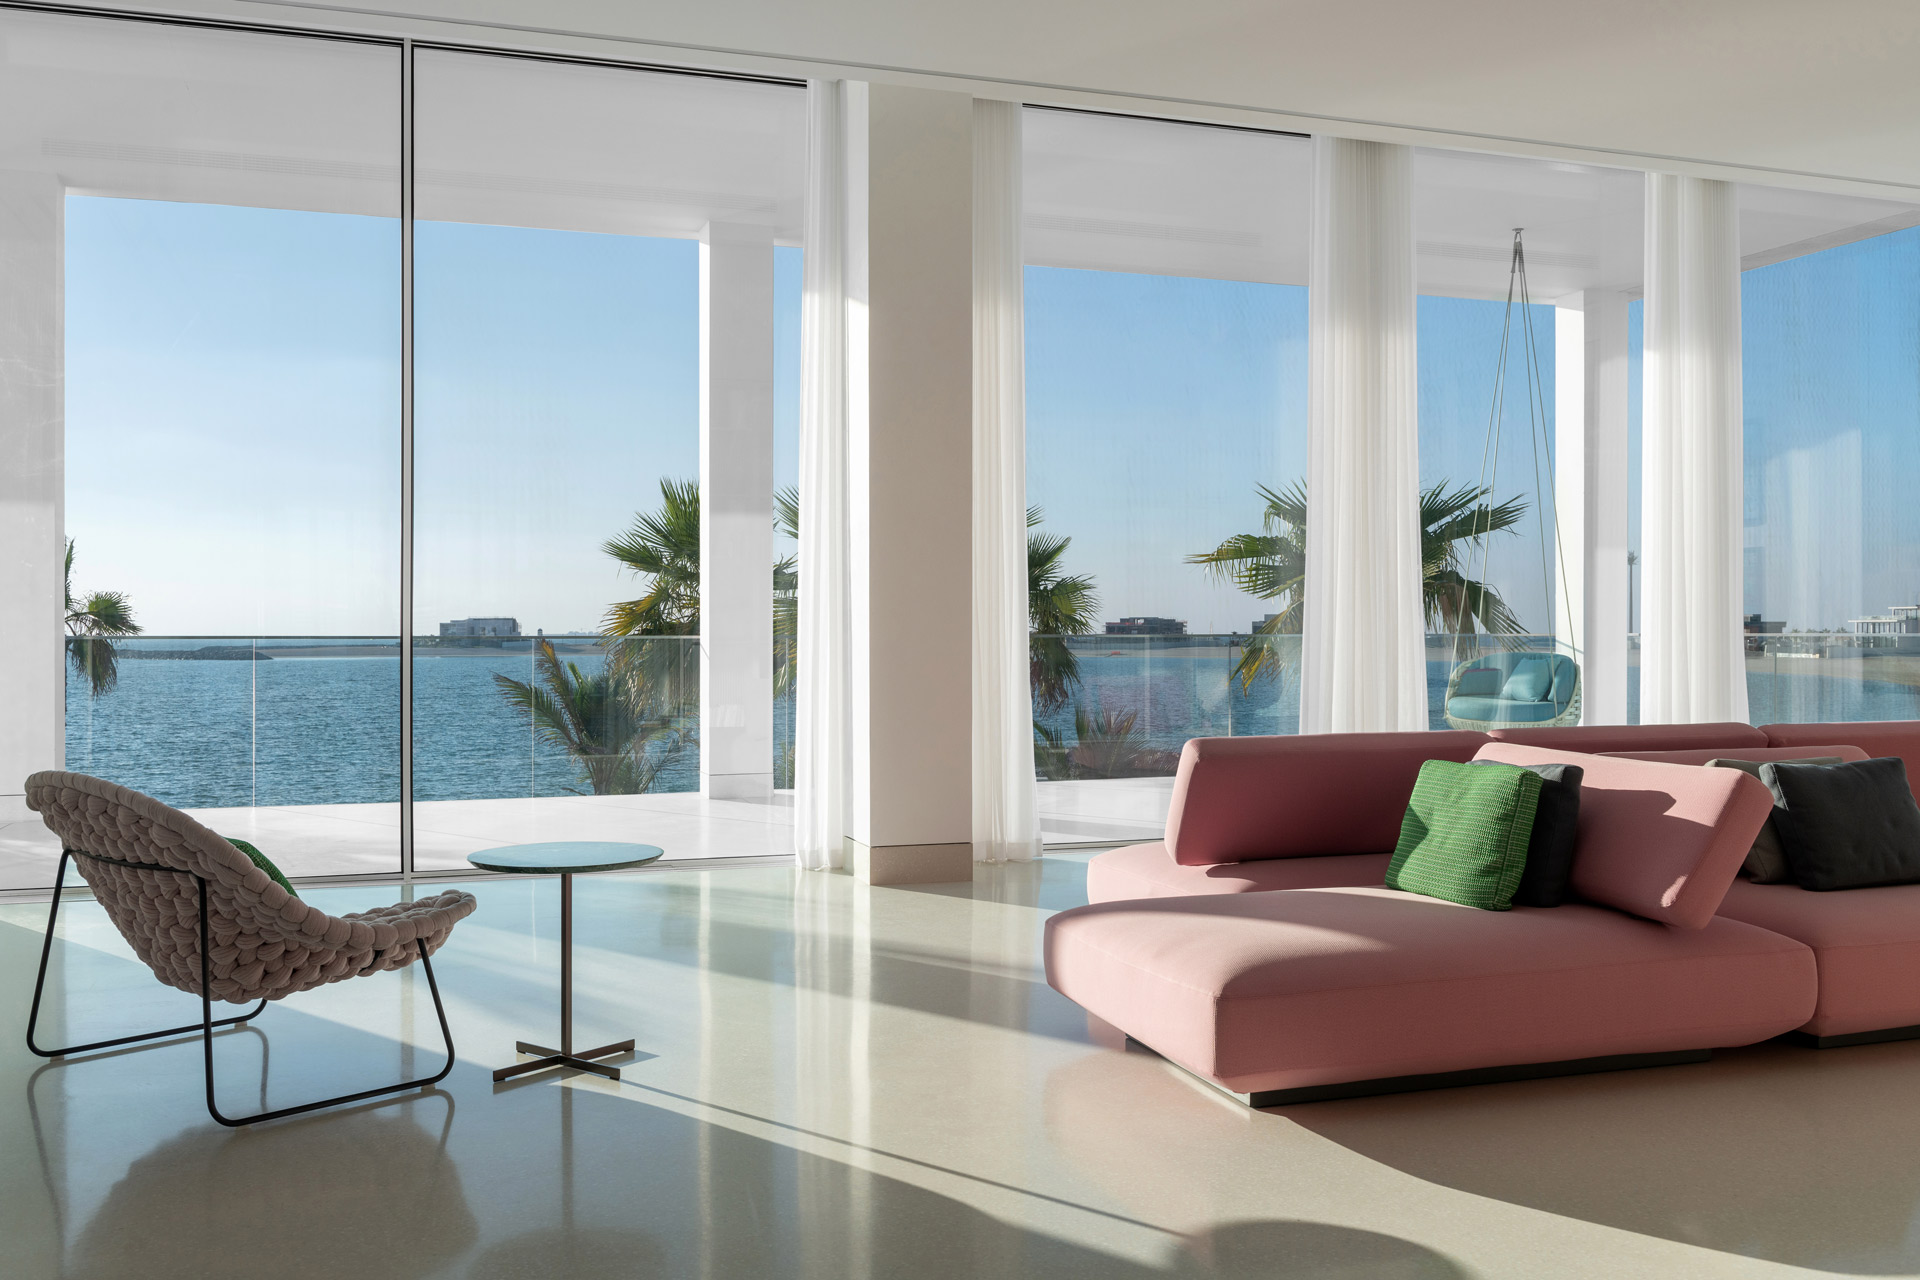 PURITY-luxury-furniture-installations-natelee-cocks-dubai-jumeirah-bay-islands-paola-lenti-furniture-08